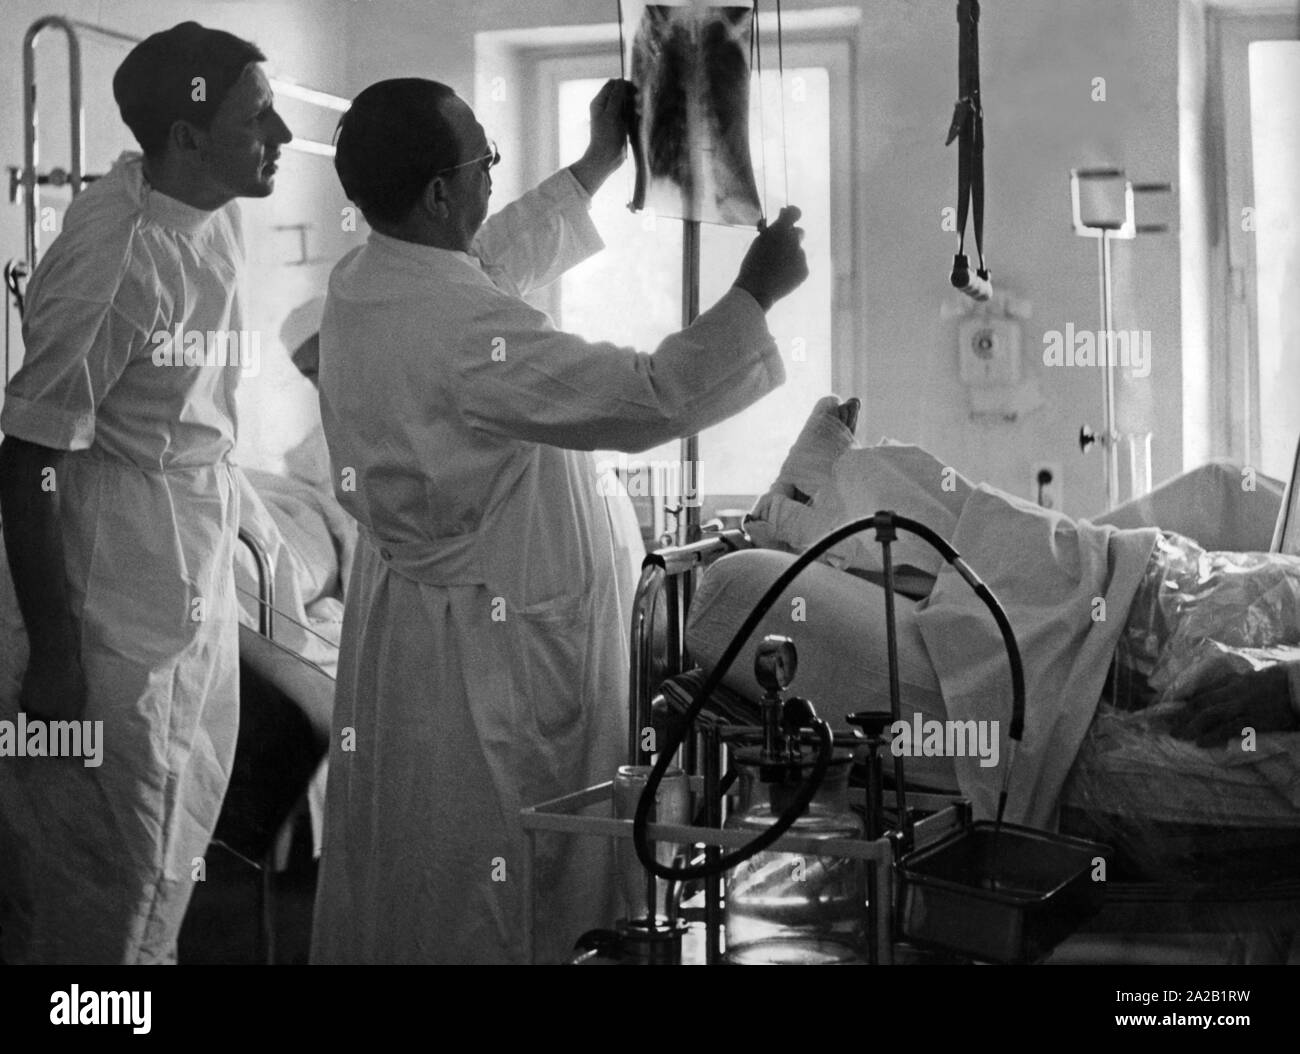 Prof. Dr. Georg Maurer (2nd from left) at the Rechts der Isar Hospital ...